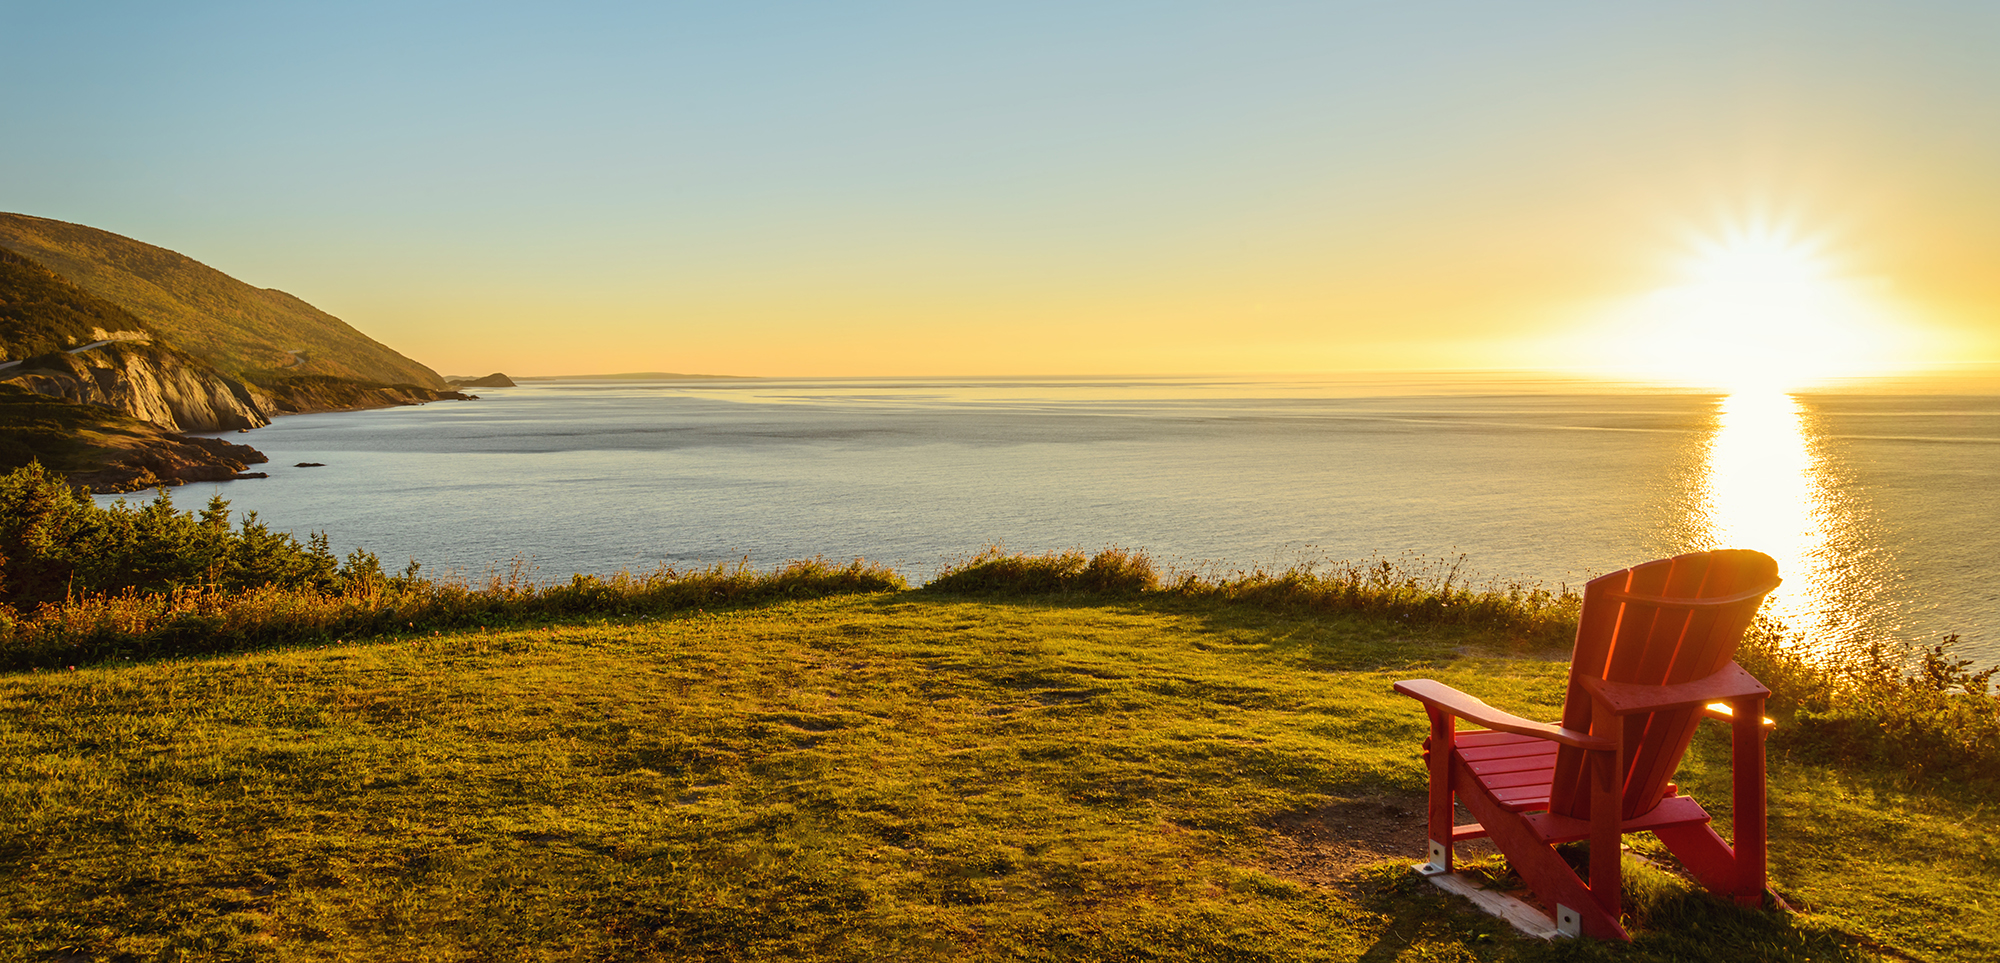 Red muskoka chair overlooking a sunset on a hill